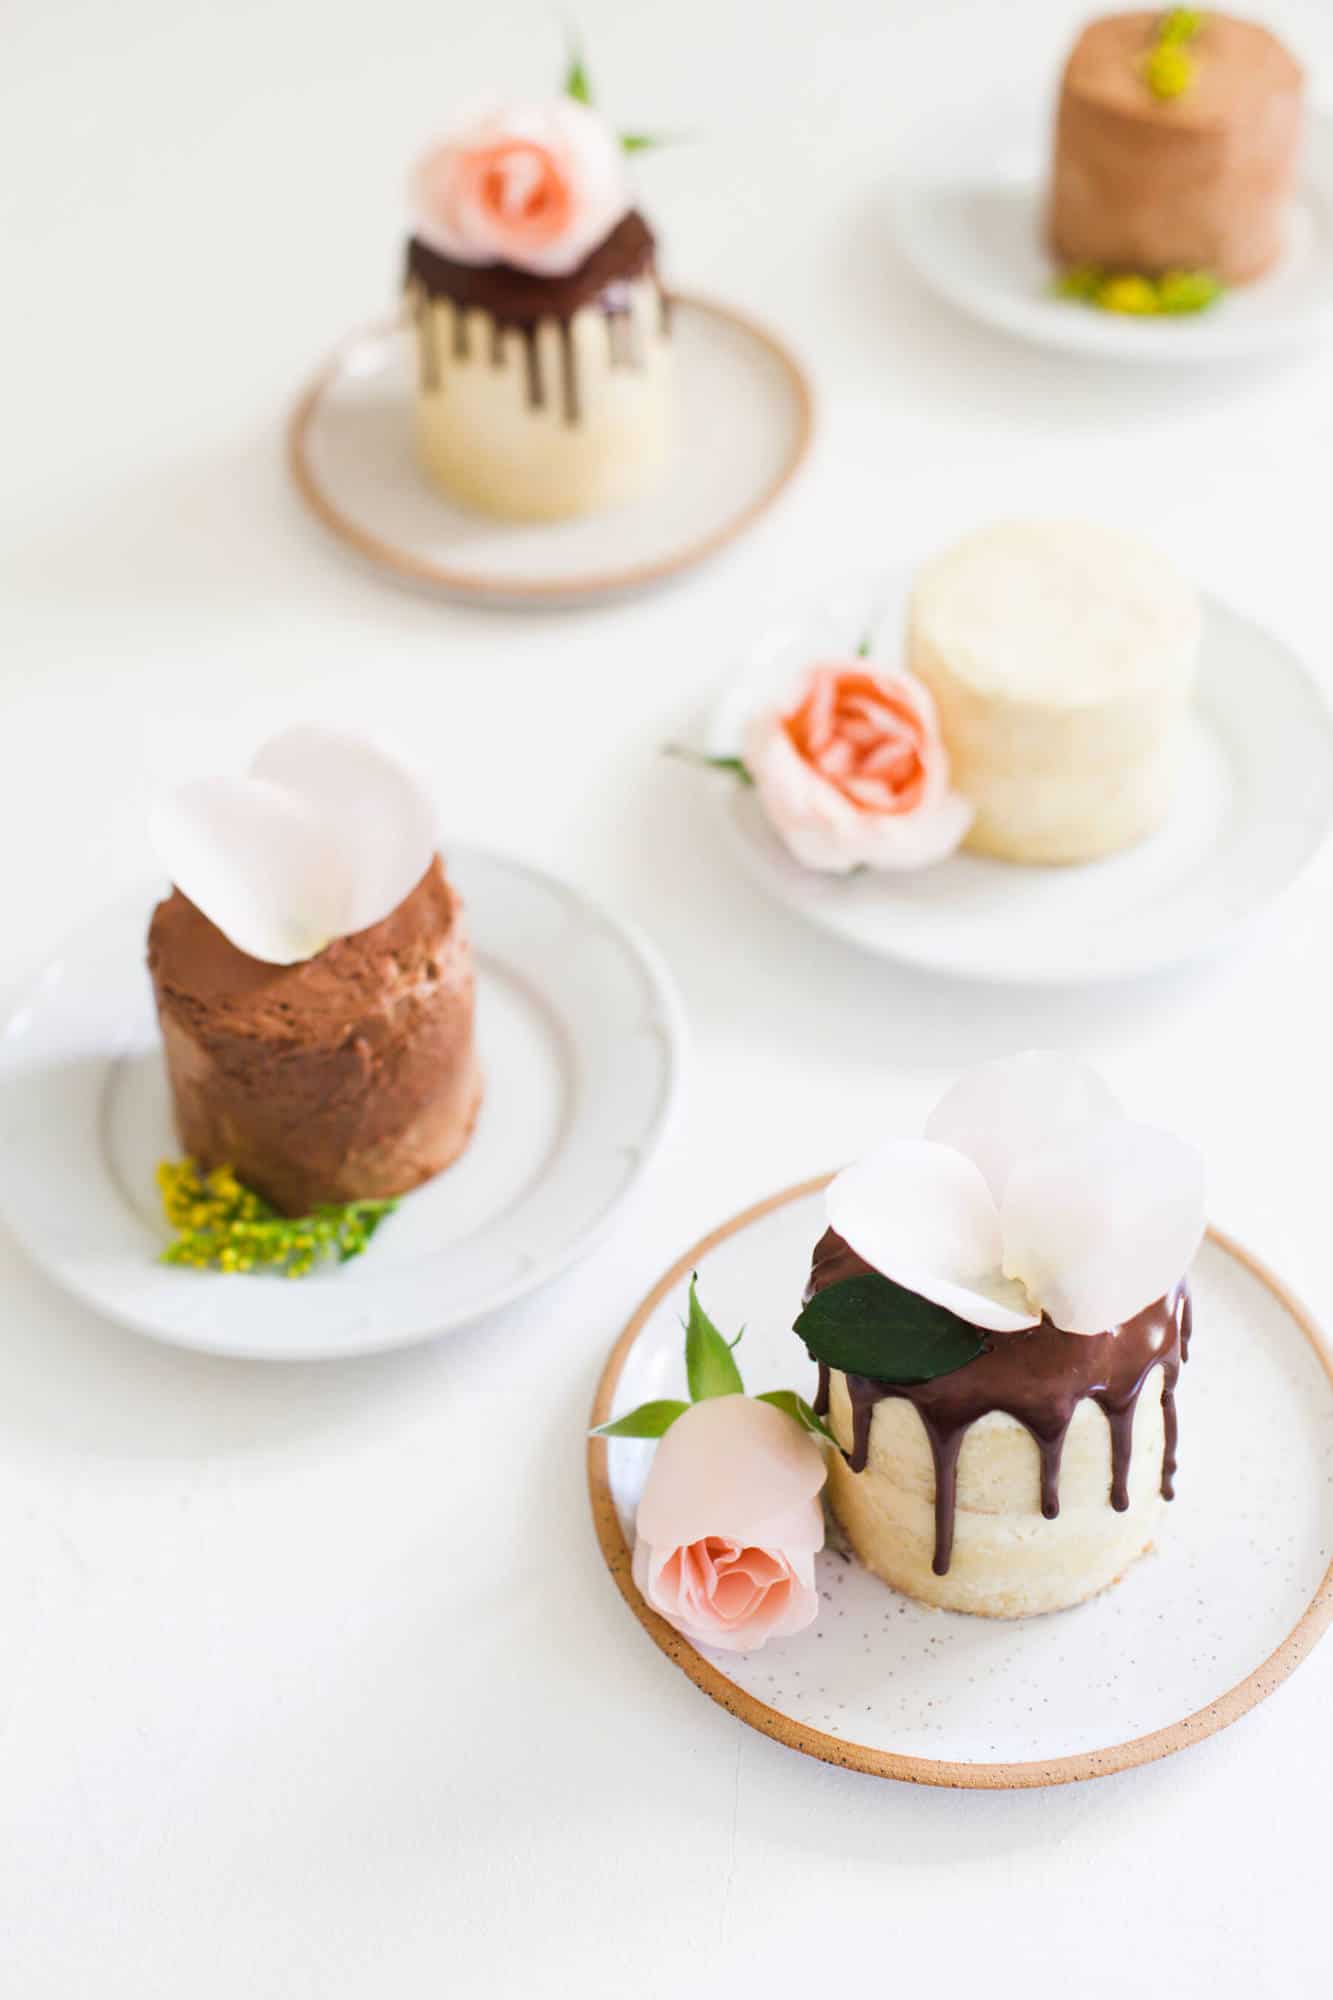 https://abeautifulmess.com/wp-content/uploads/2018/11/How-to-bake-sheet-pan-mini-cakes-8.jpg